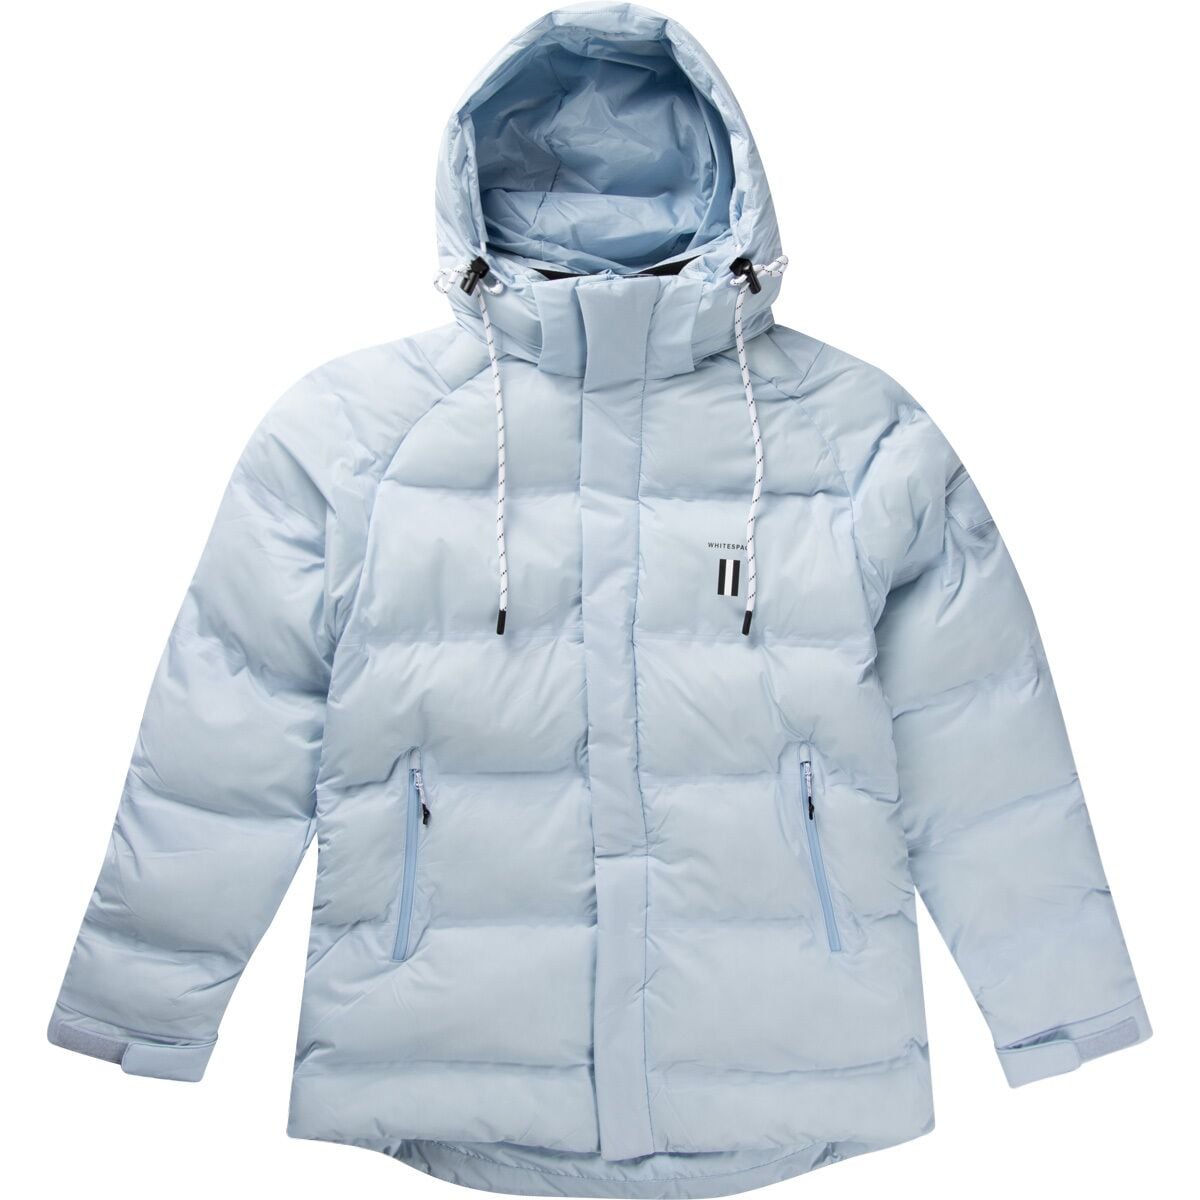 WHITESPACE Waterproof Insulated Puffy Jacket - Women's Sky Blue